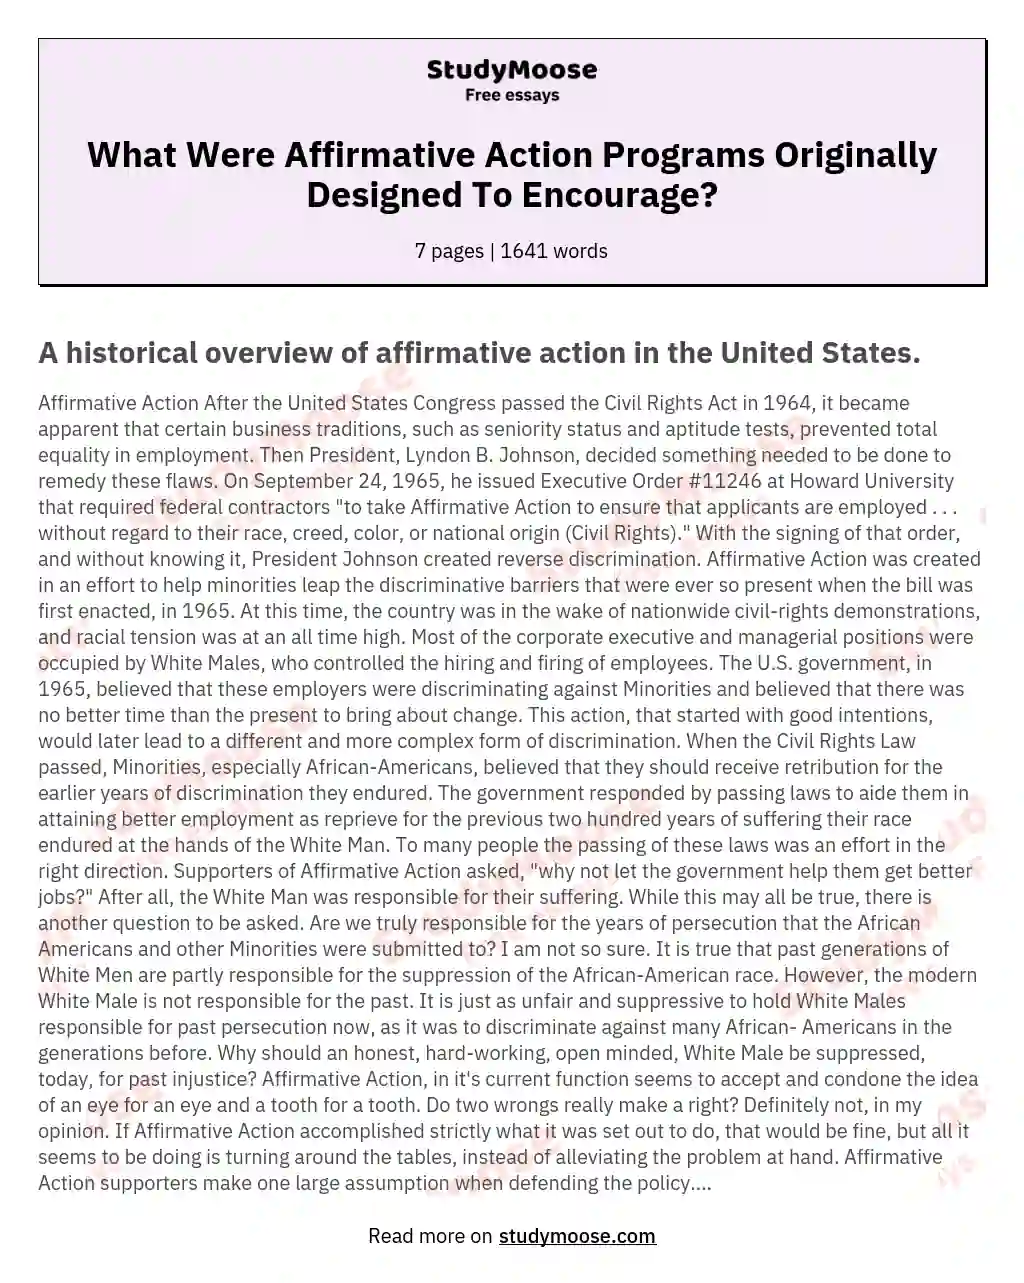 What Were Affirmative Action Programs Originally Designed To Encourage? essay